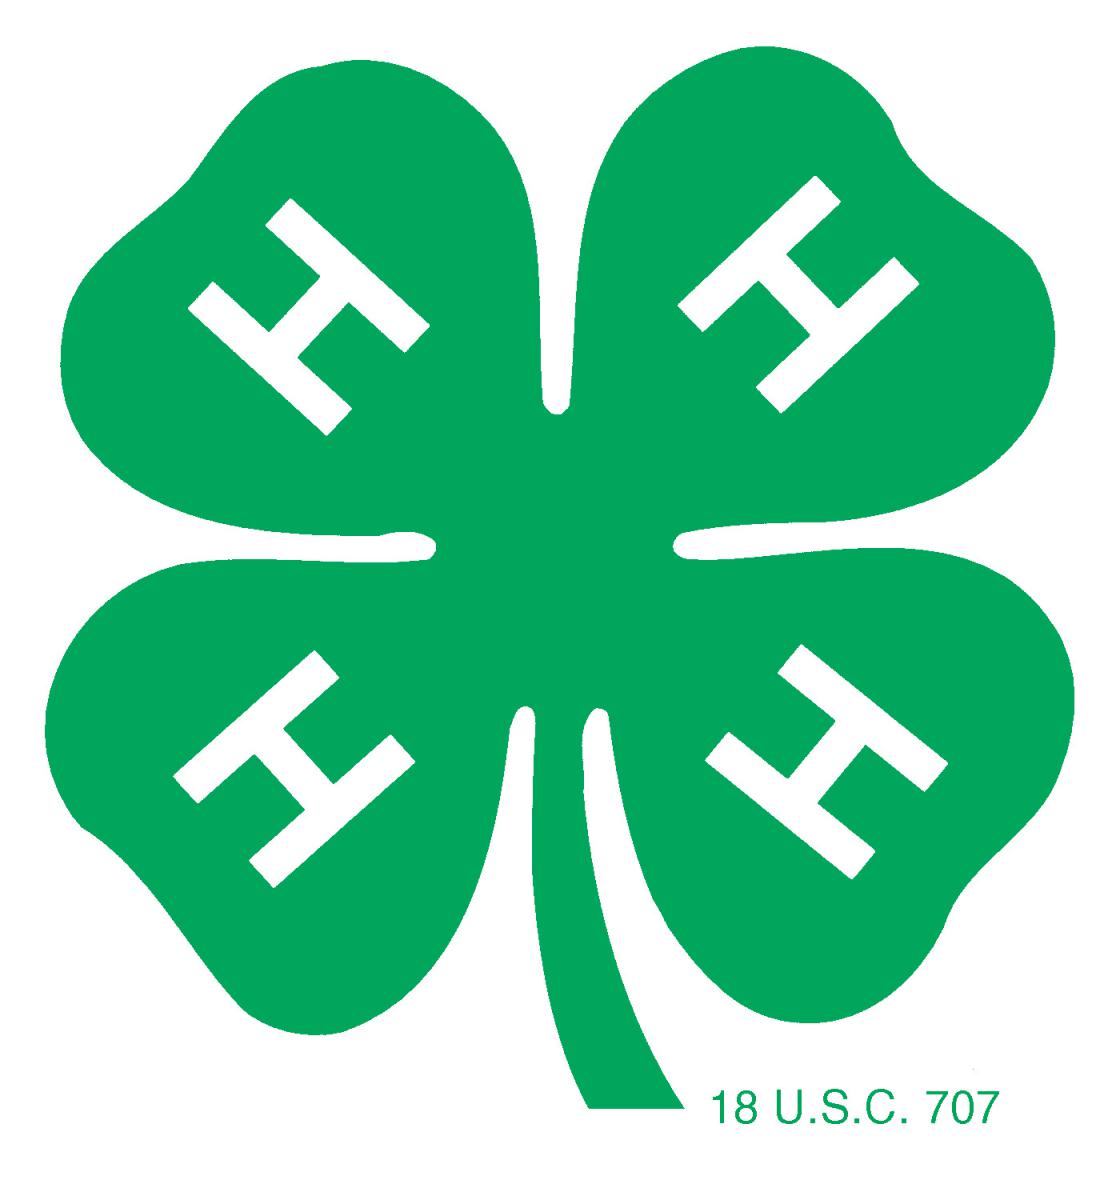 green 4-leaf clover with an H on each leaf